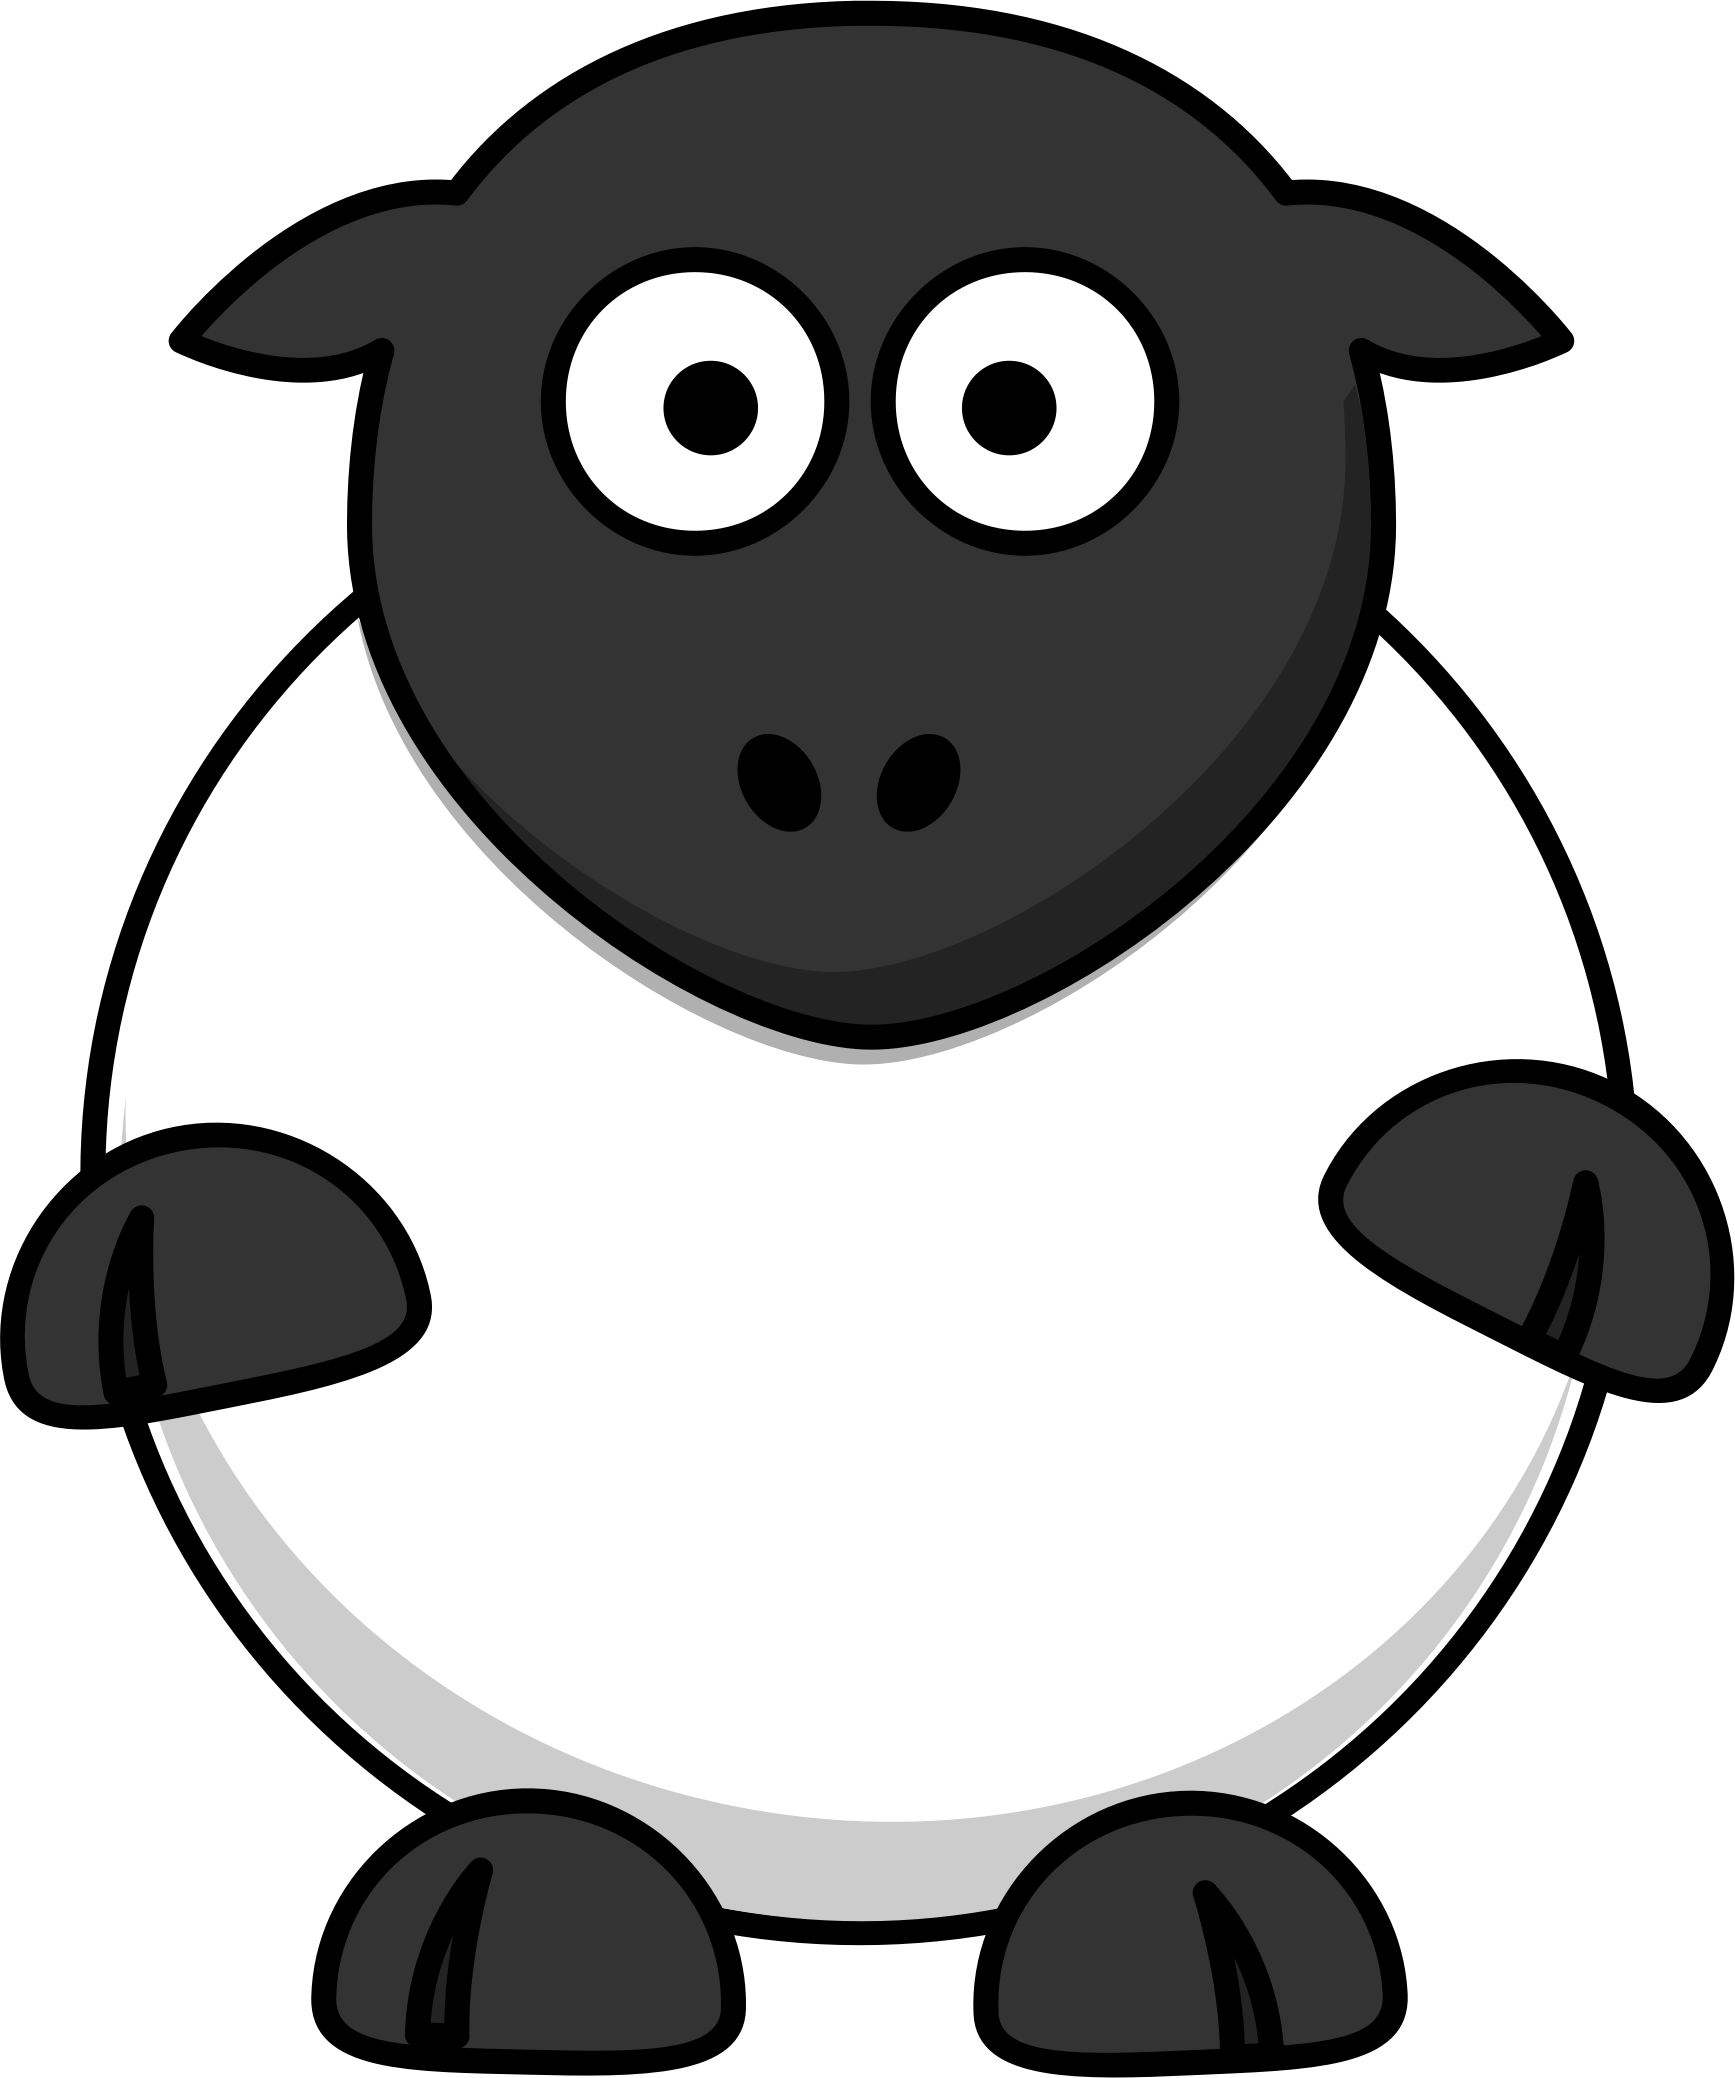 Silly Sheep - Cartoon Sheep (1735x2078)